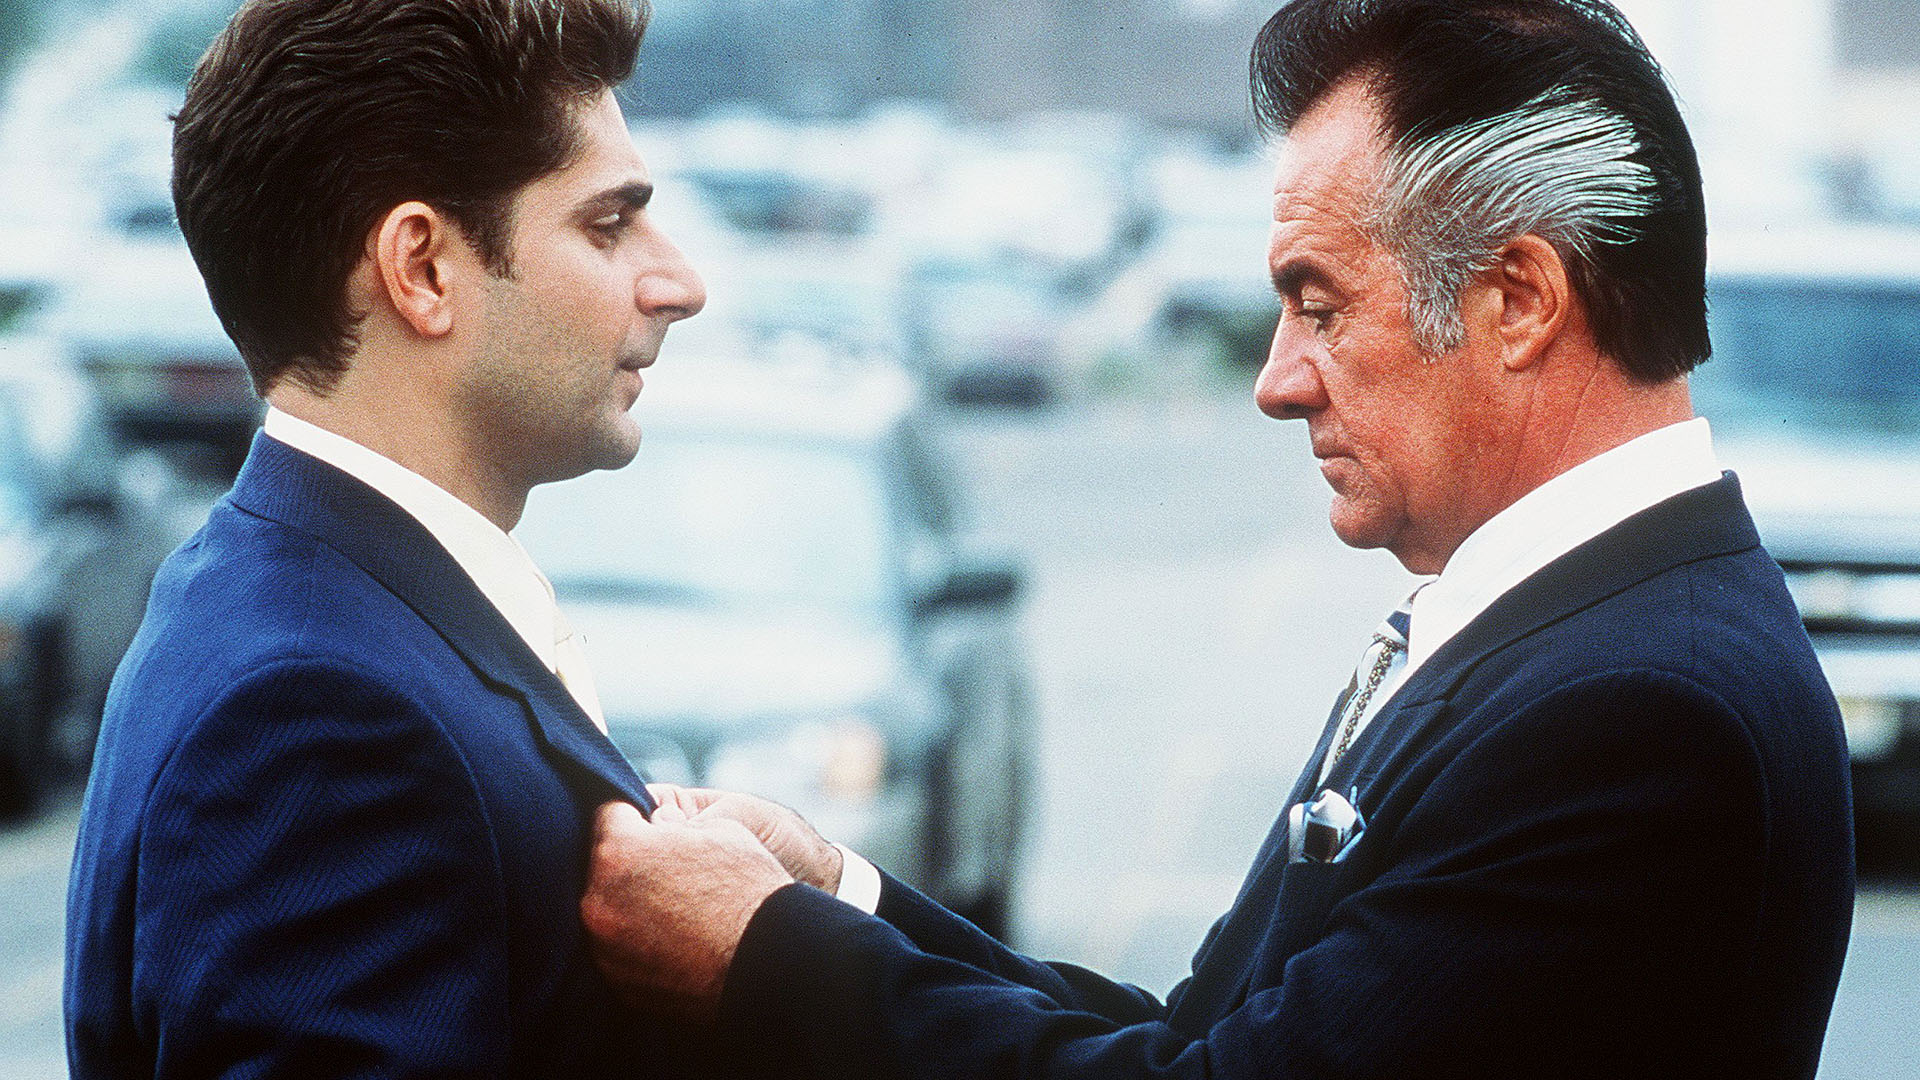 Christopher Moltisanti (Michael Imperioli) y Paulie Walnuts (Tony Sirico) en una escena de Los Soprano. Foto: Barry Wetcher/Hbo/Kobal/Shutterstock (5886200h)
